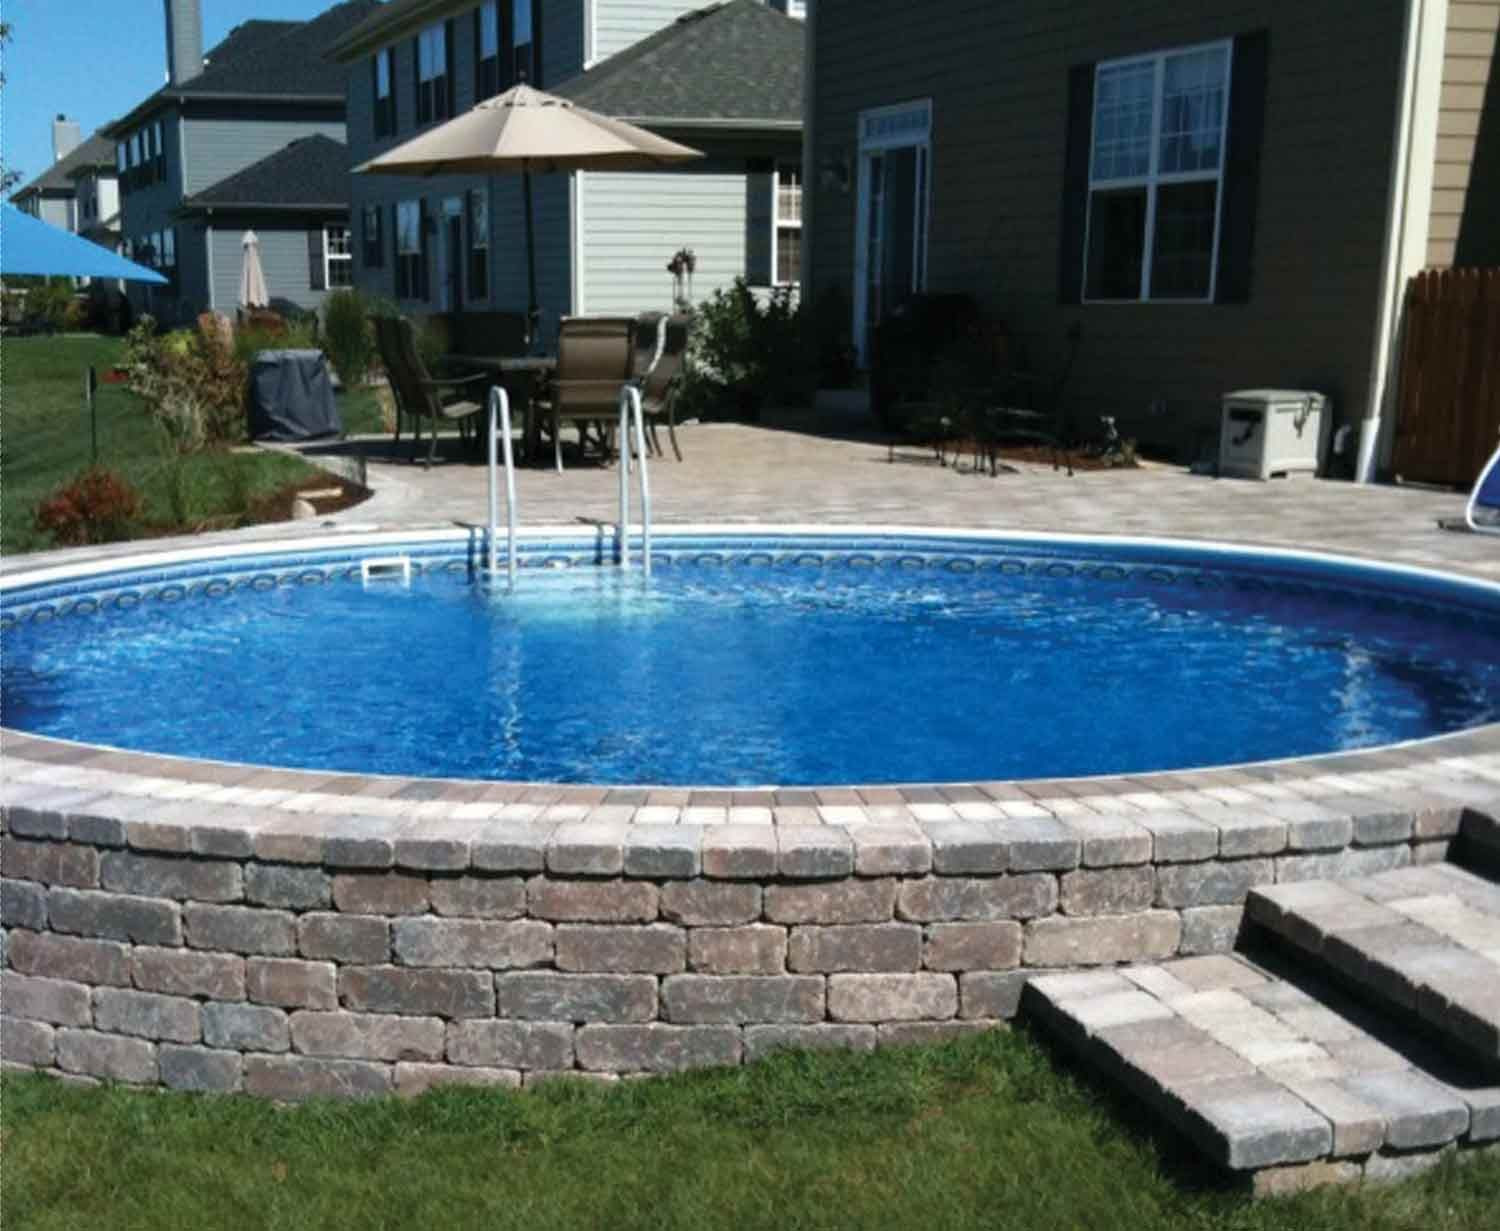 Best ideas about DIY Inground Pool
. Save or Pin Best 25 In ground pools ideas on Pinterest Now.